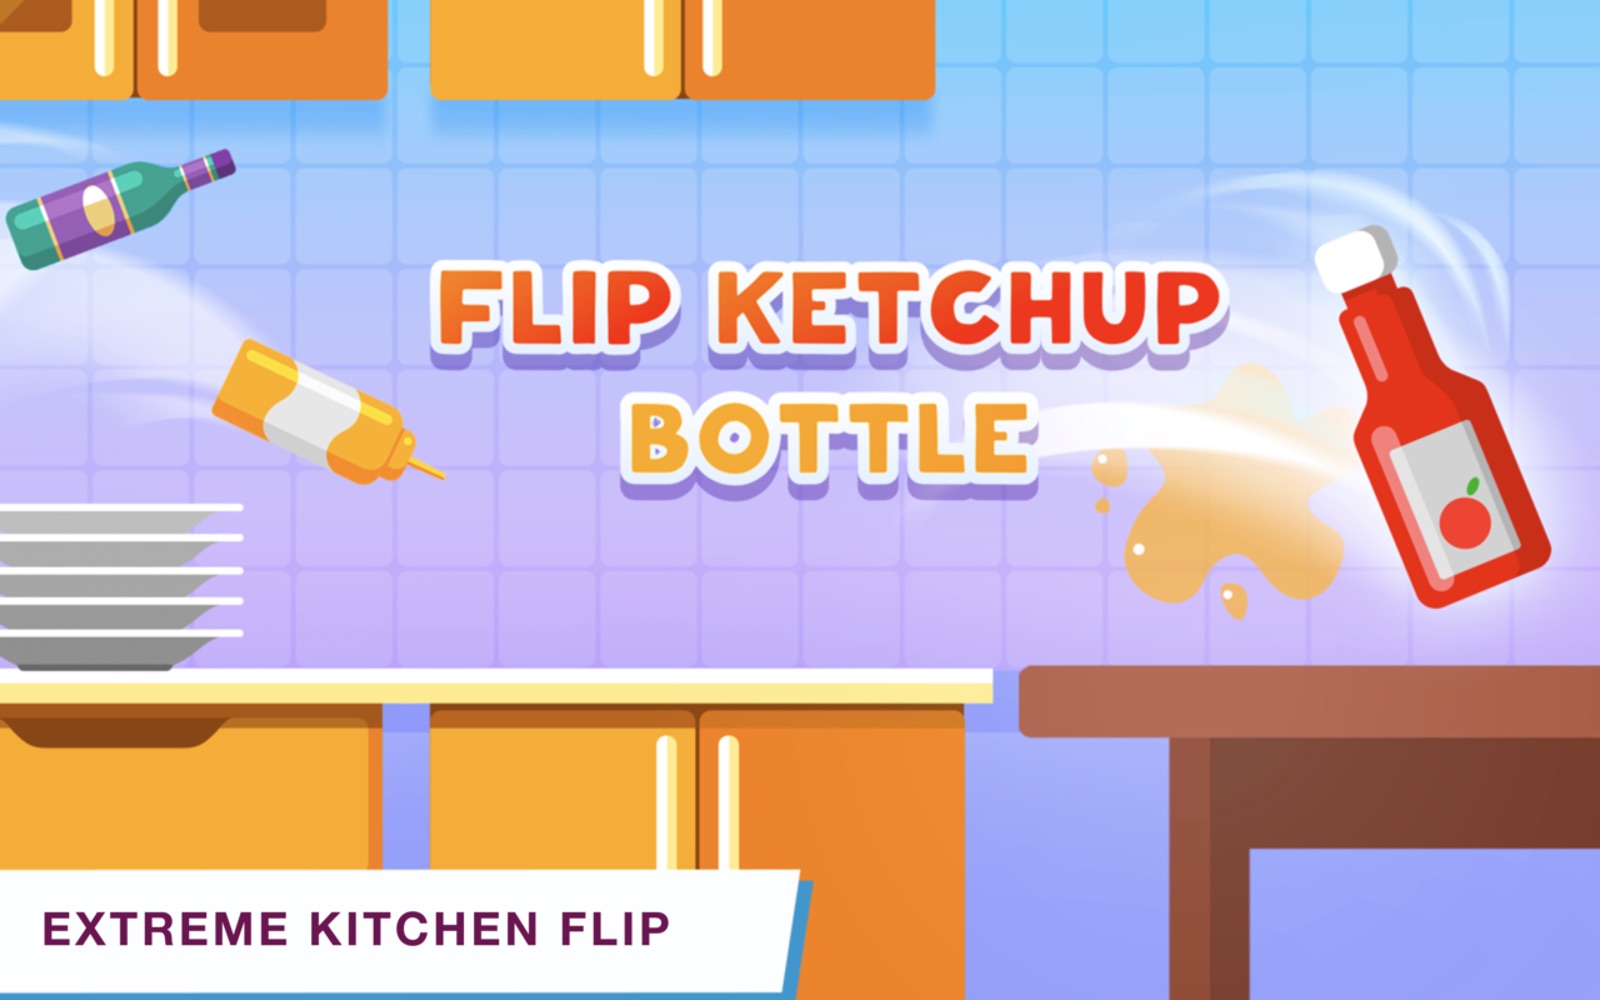 Flip Ketchup Bottle 1.0 : Main Window